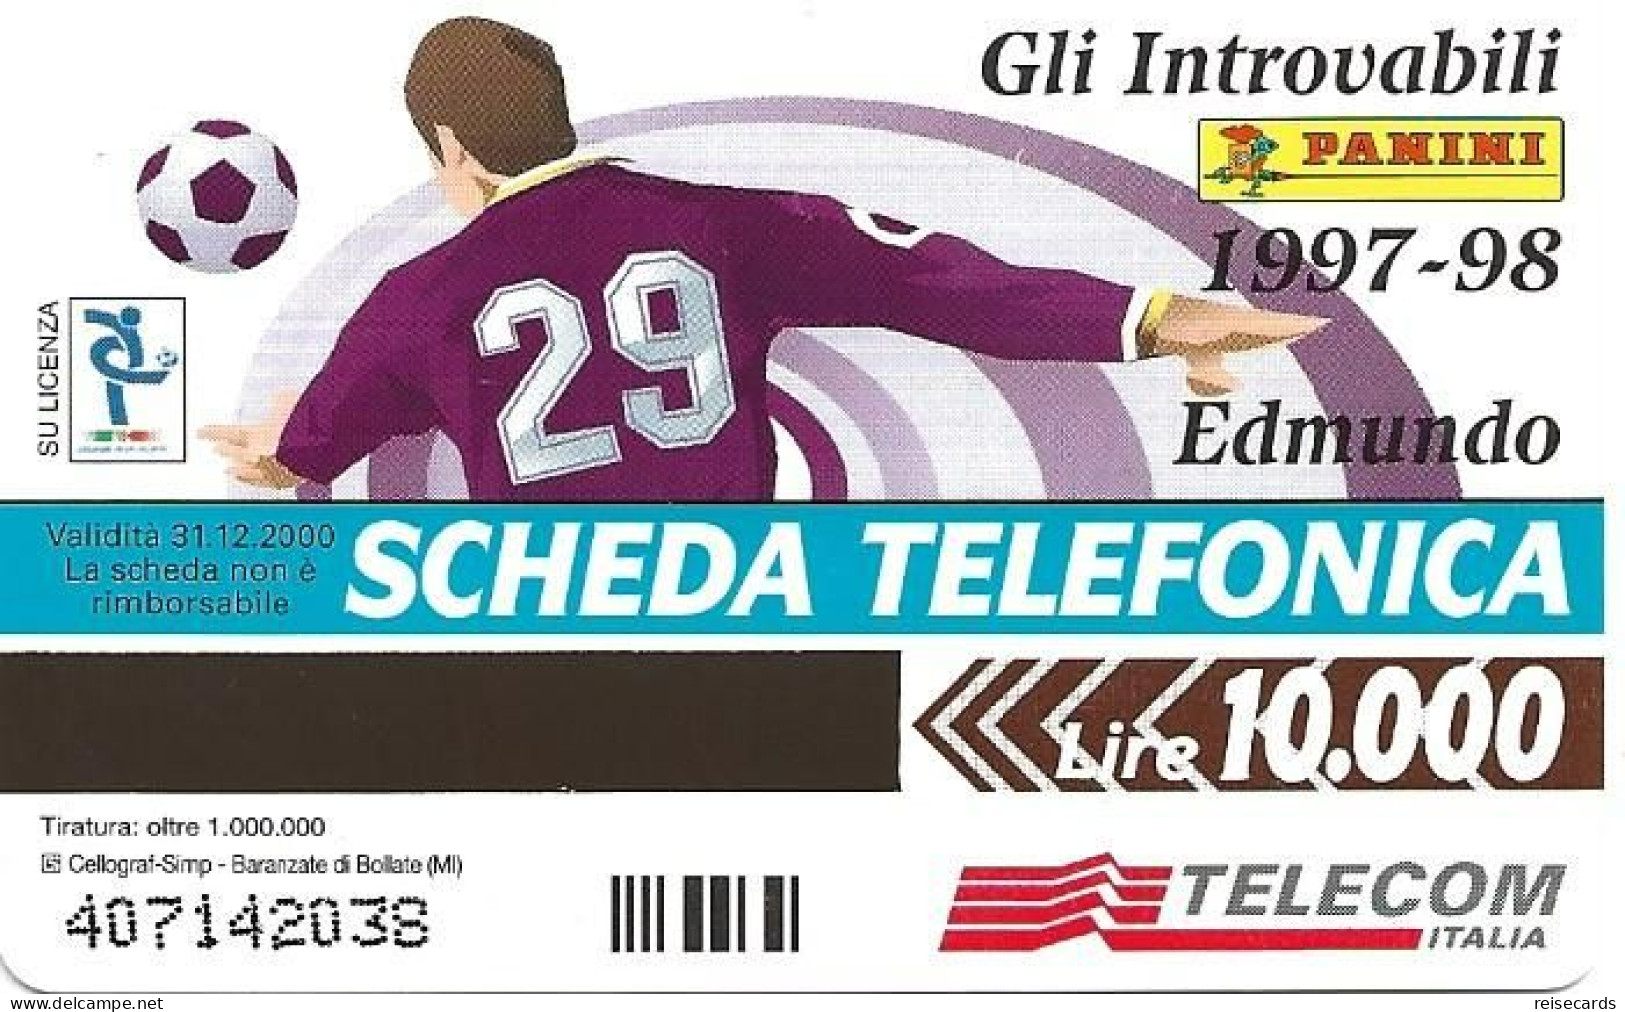 Italy: Telecom Italia - Panini, Edmundo, Fiorentina - Öff. Werbe-TK